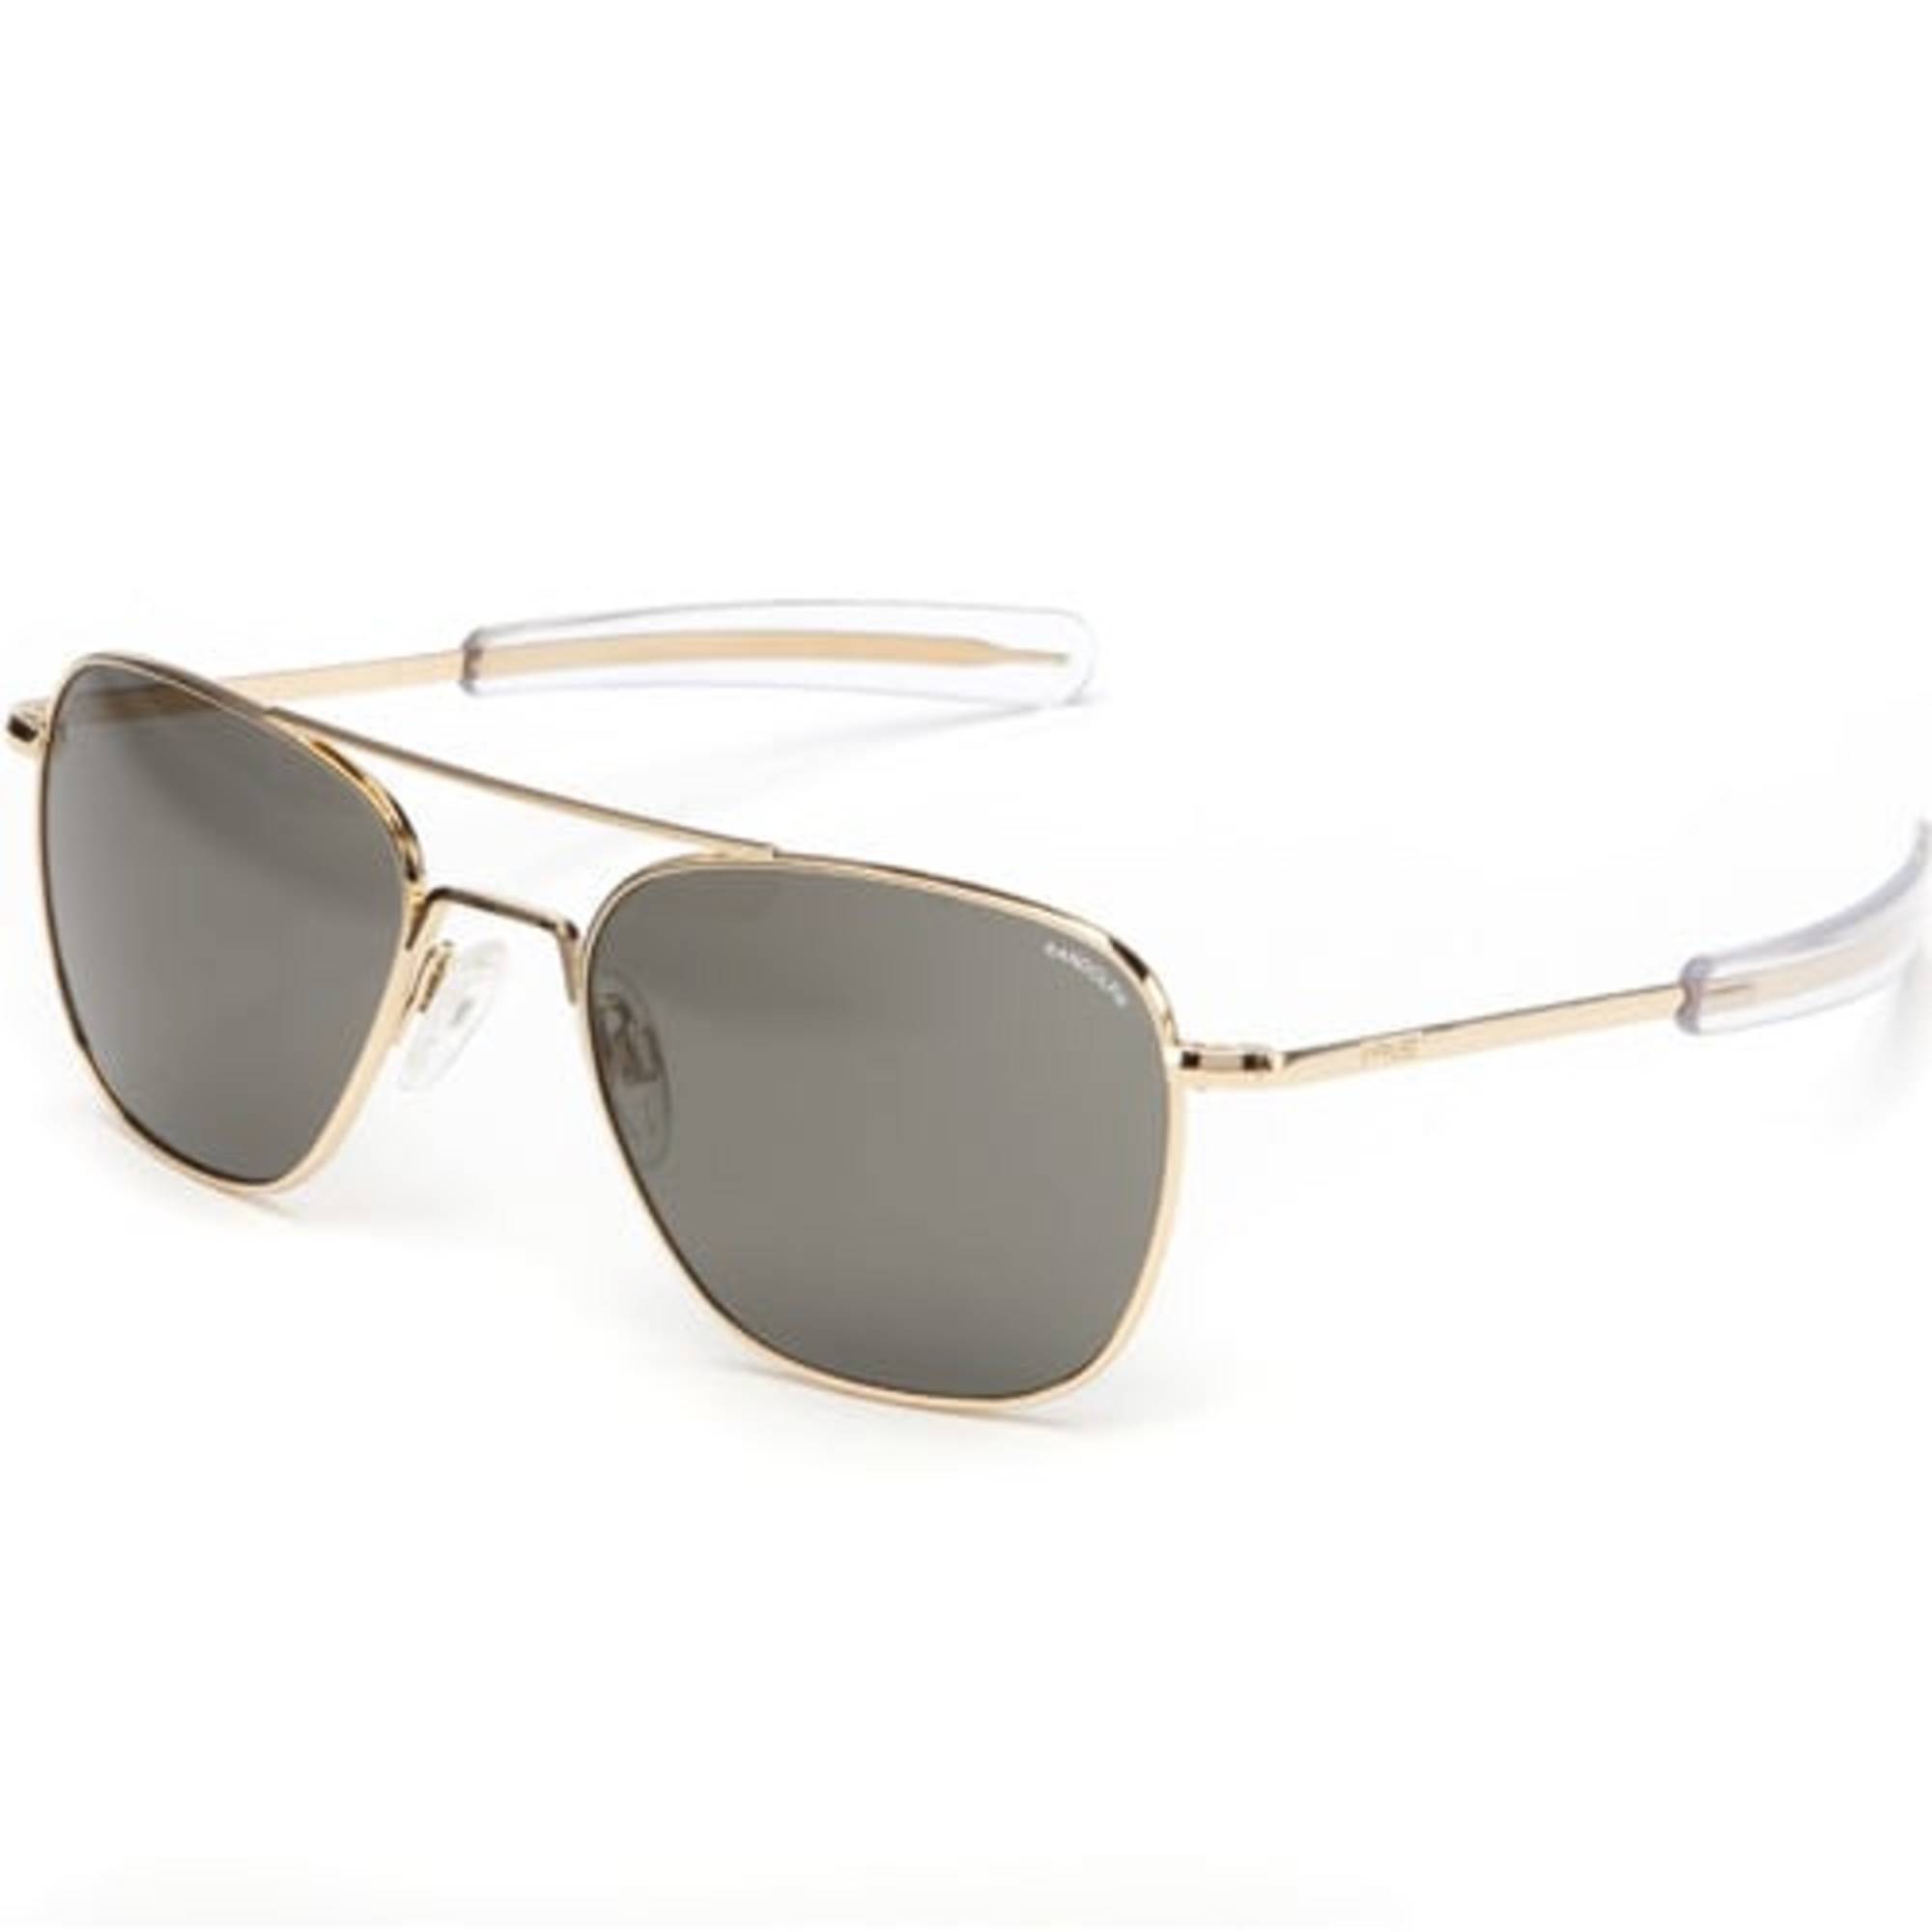 Standard sunglasses, sport sunglasses, aviator sunglasses Magnet